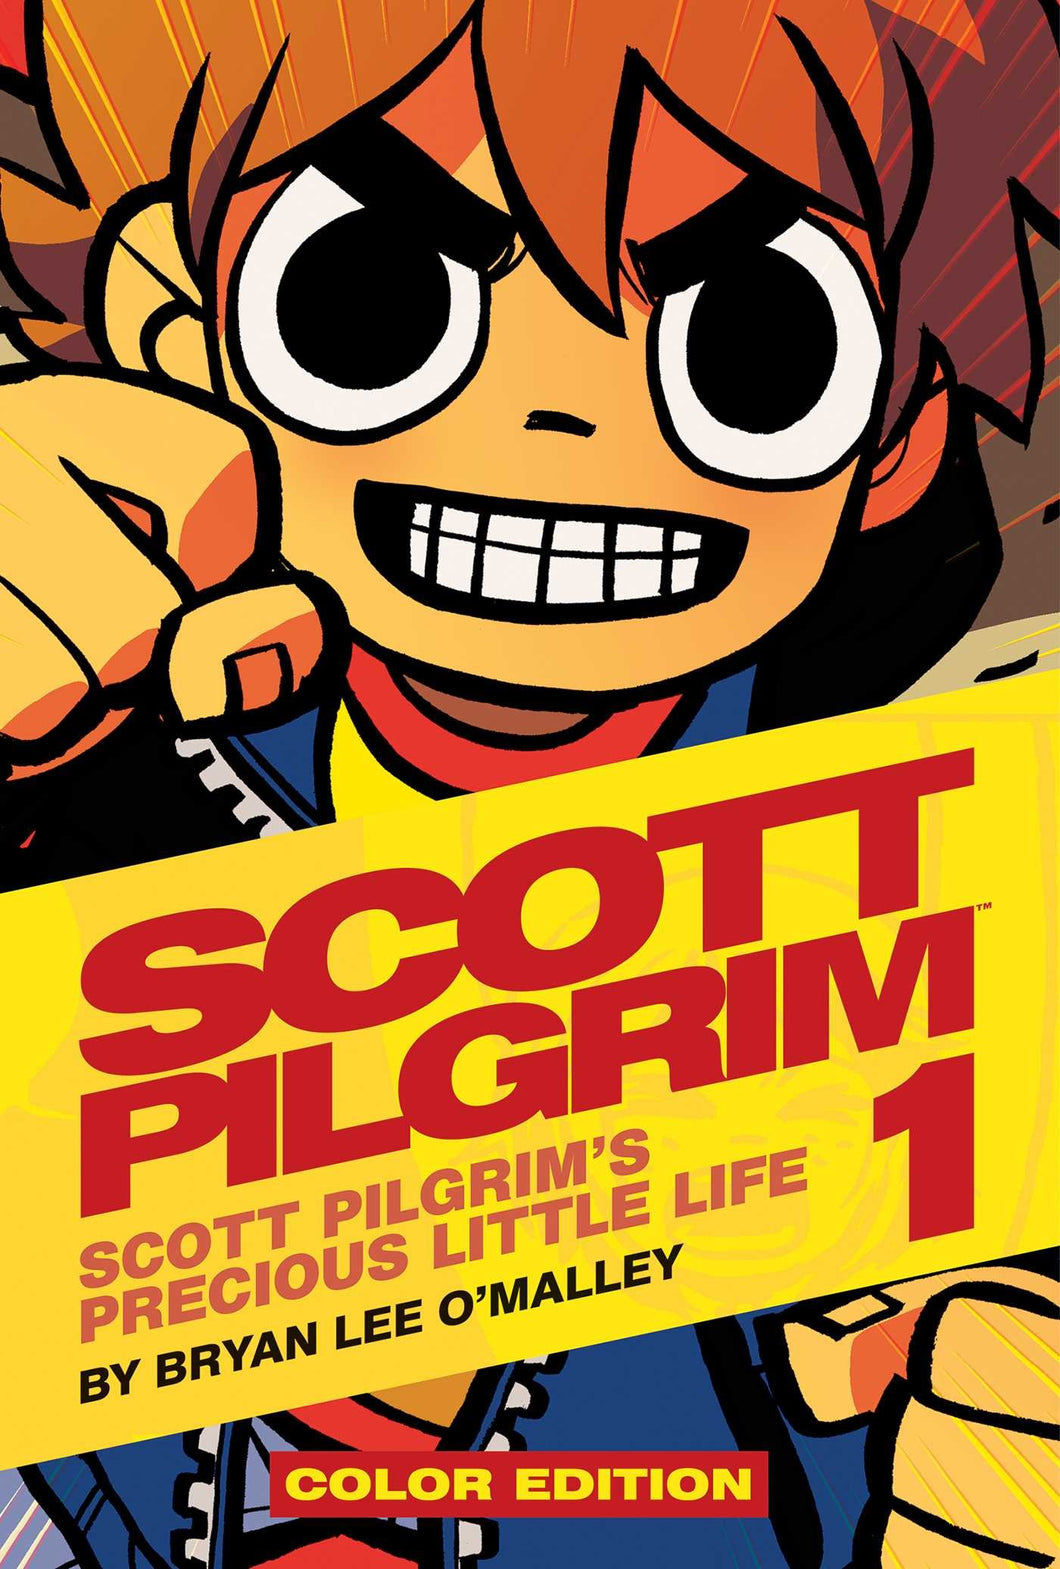 Scott Pilgrim Volume 1: Precious Little Life by Bryan Lee O'Malley